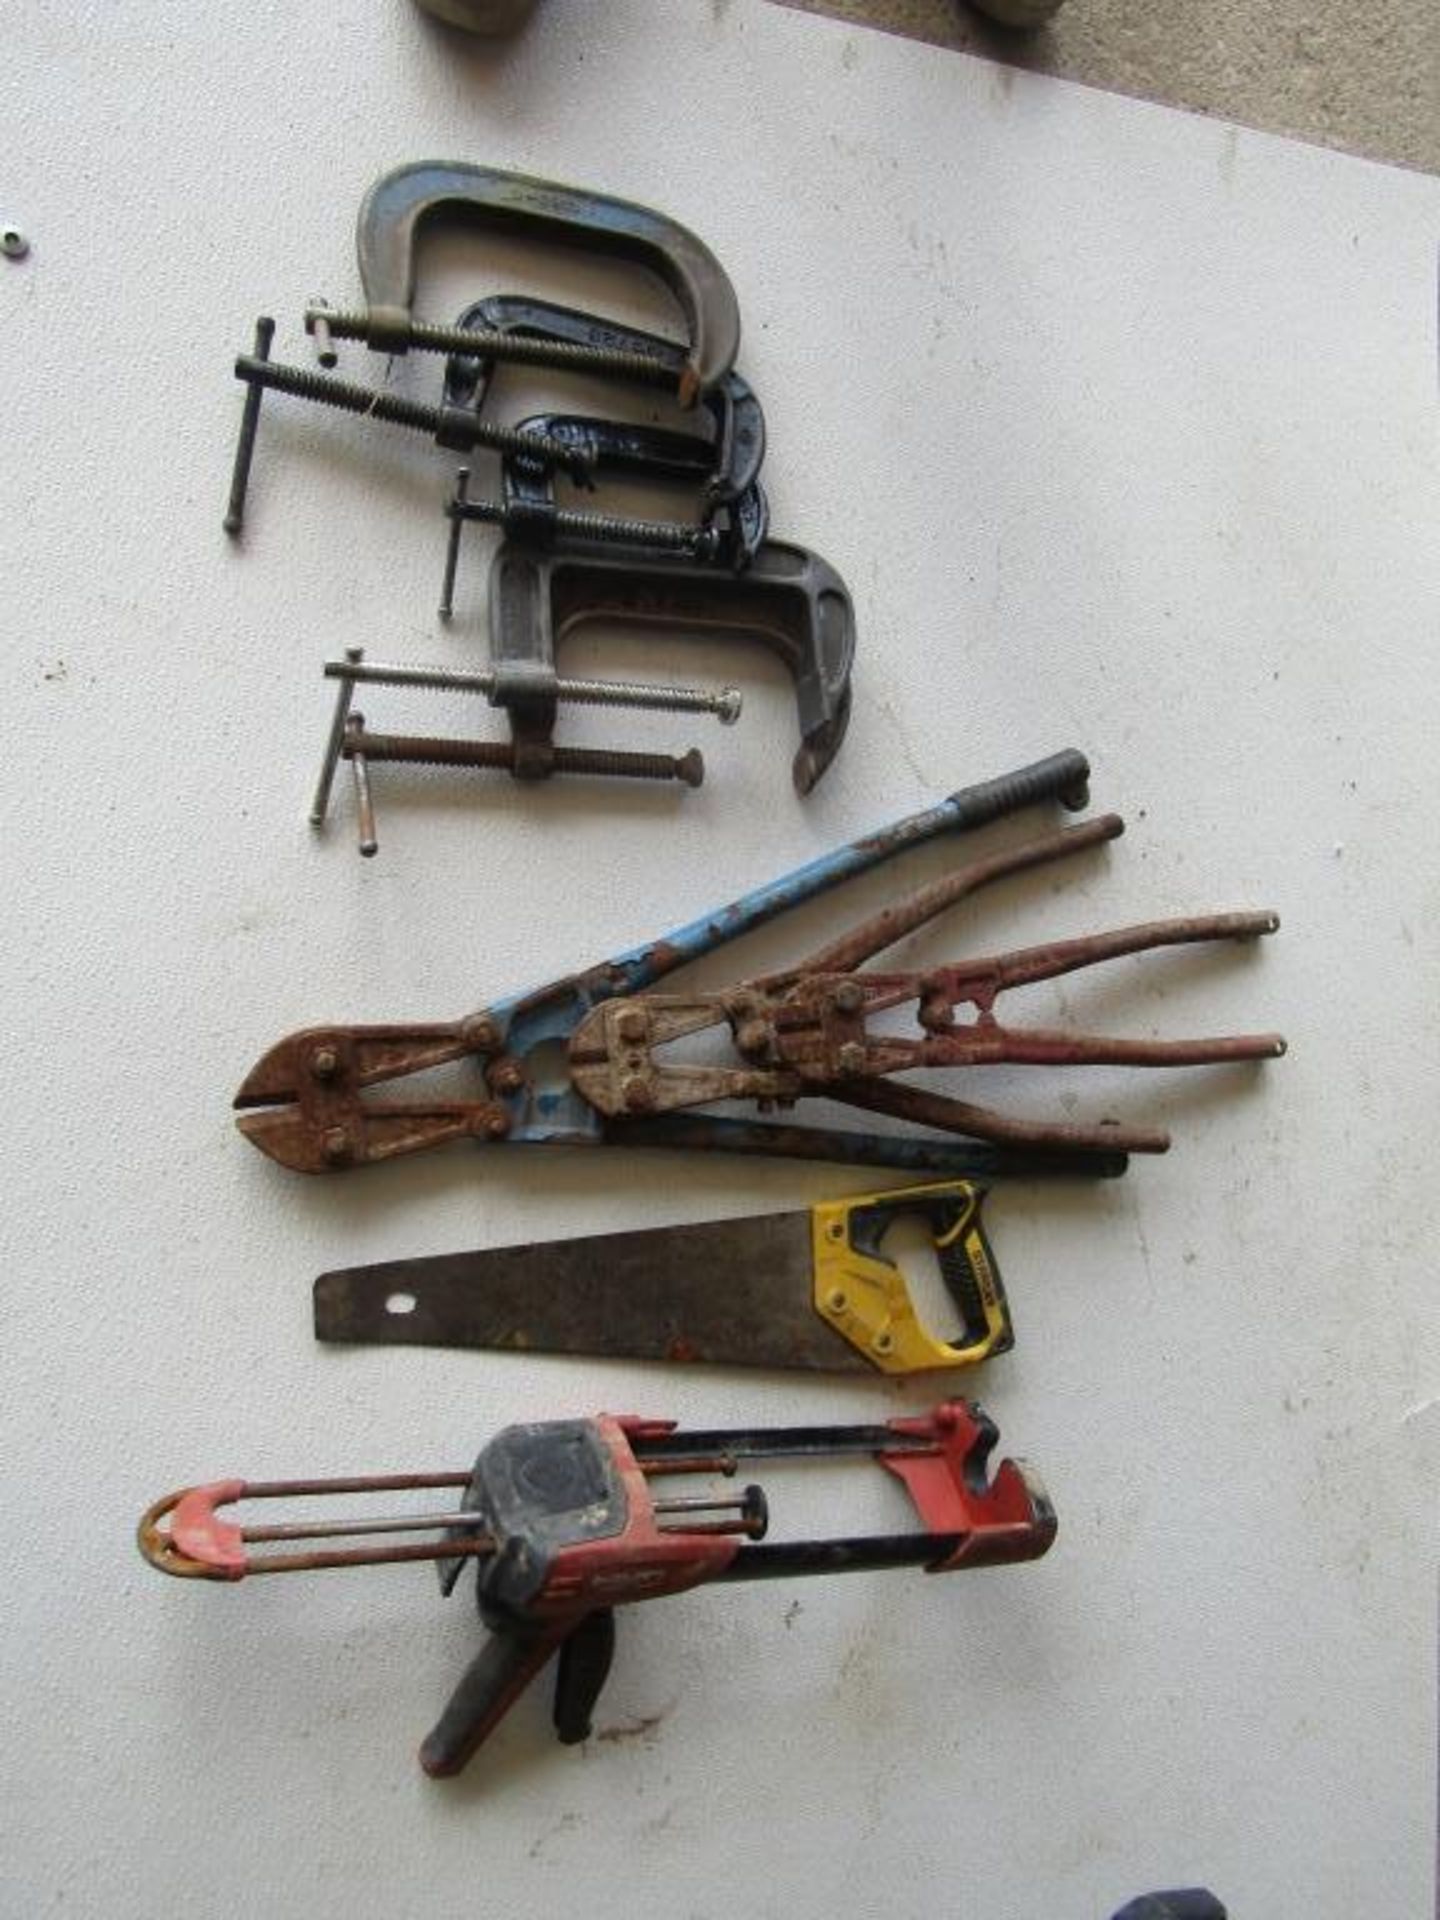 (10) Miscellaneous Tools, (5) C-Clamps, (3) Bolt Cutters, (1) Hand Saw, (1) Caulking Gun,